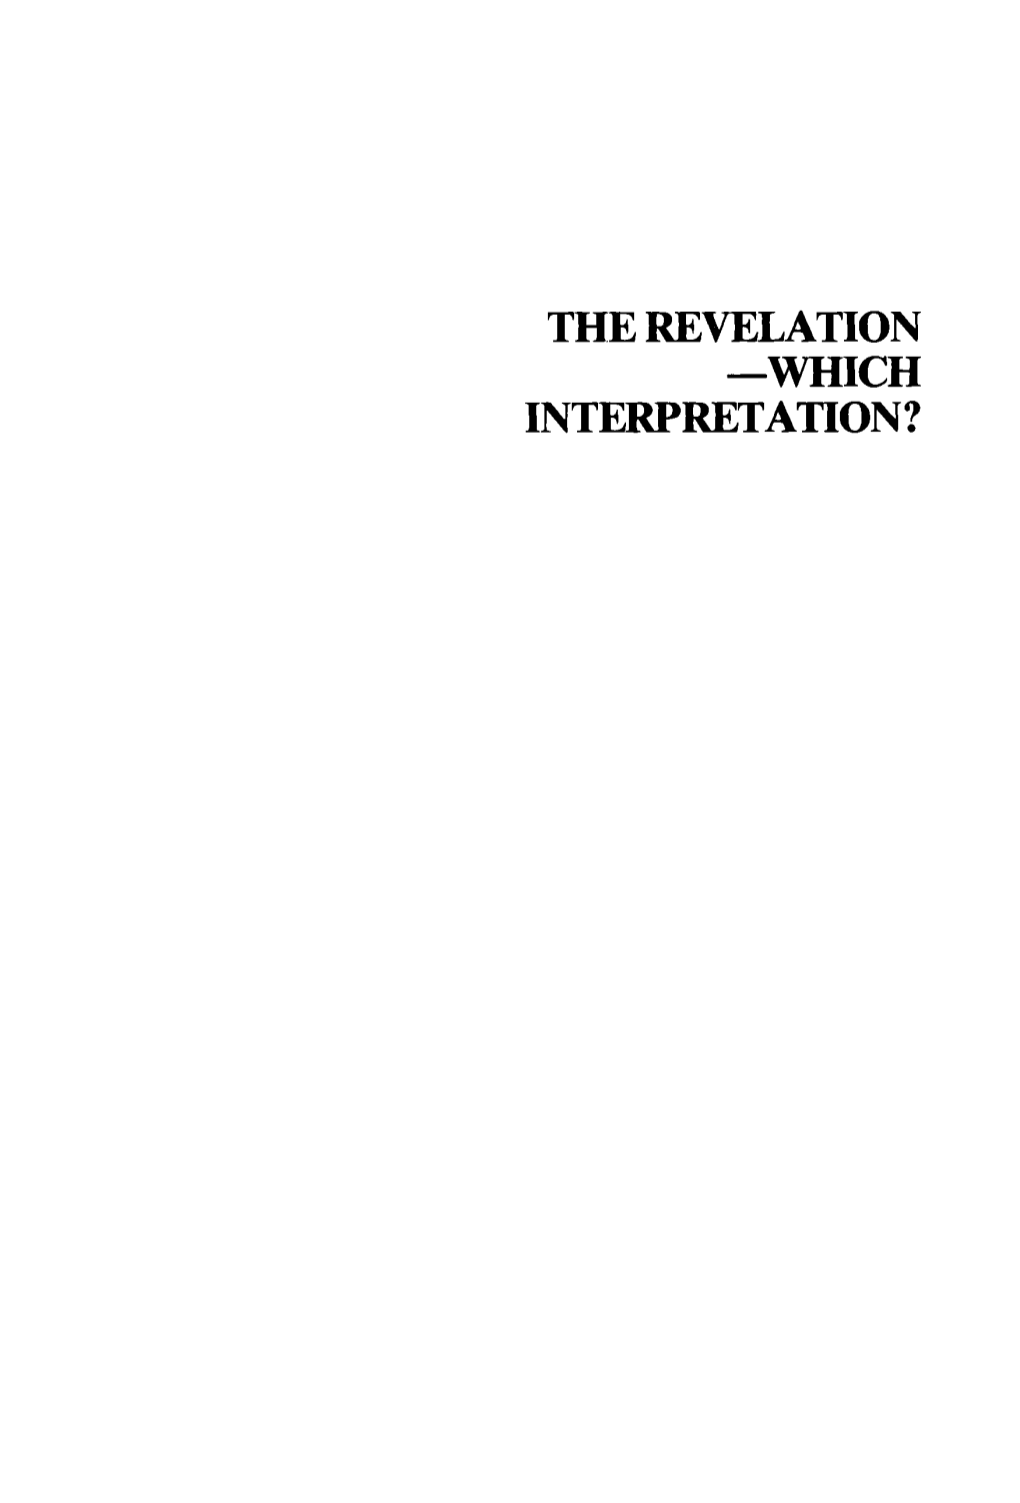 THE REVELATION —WHICH INTERPRETATION? Typeset and Printed by STALLARD & POTTER, 2 Jervois Street, Torrensville, South Australia 5031